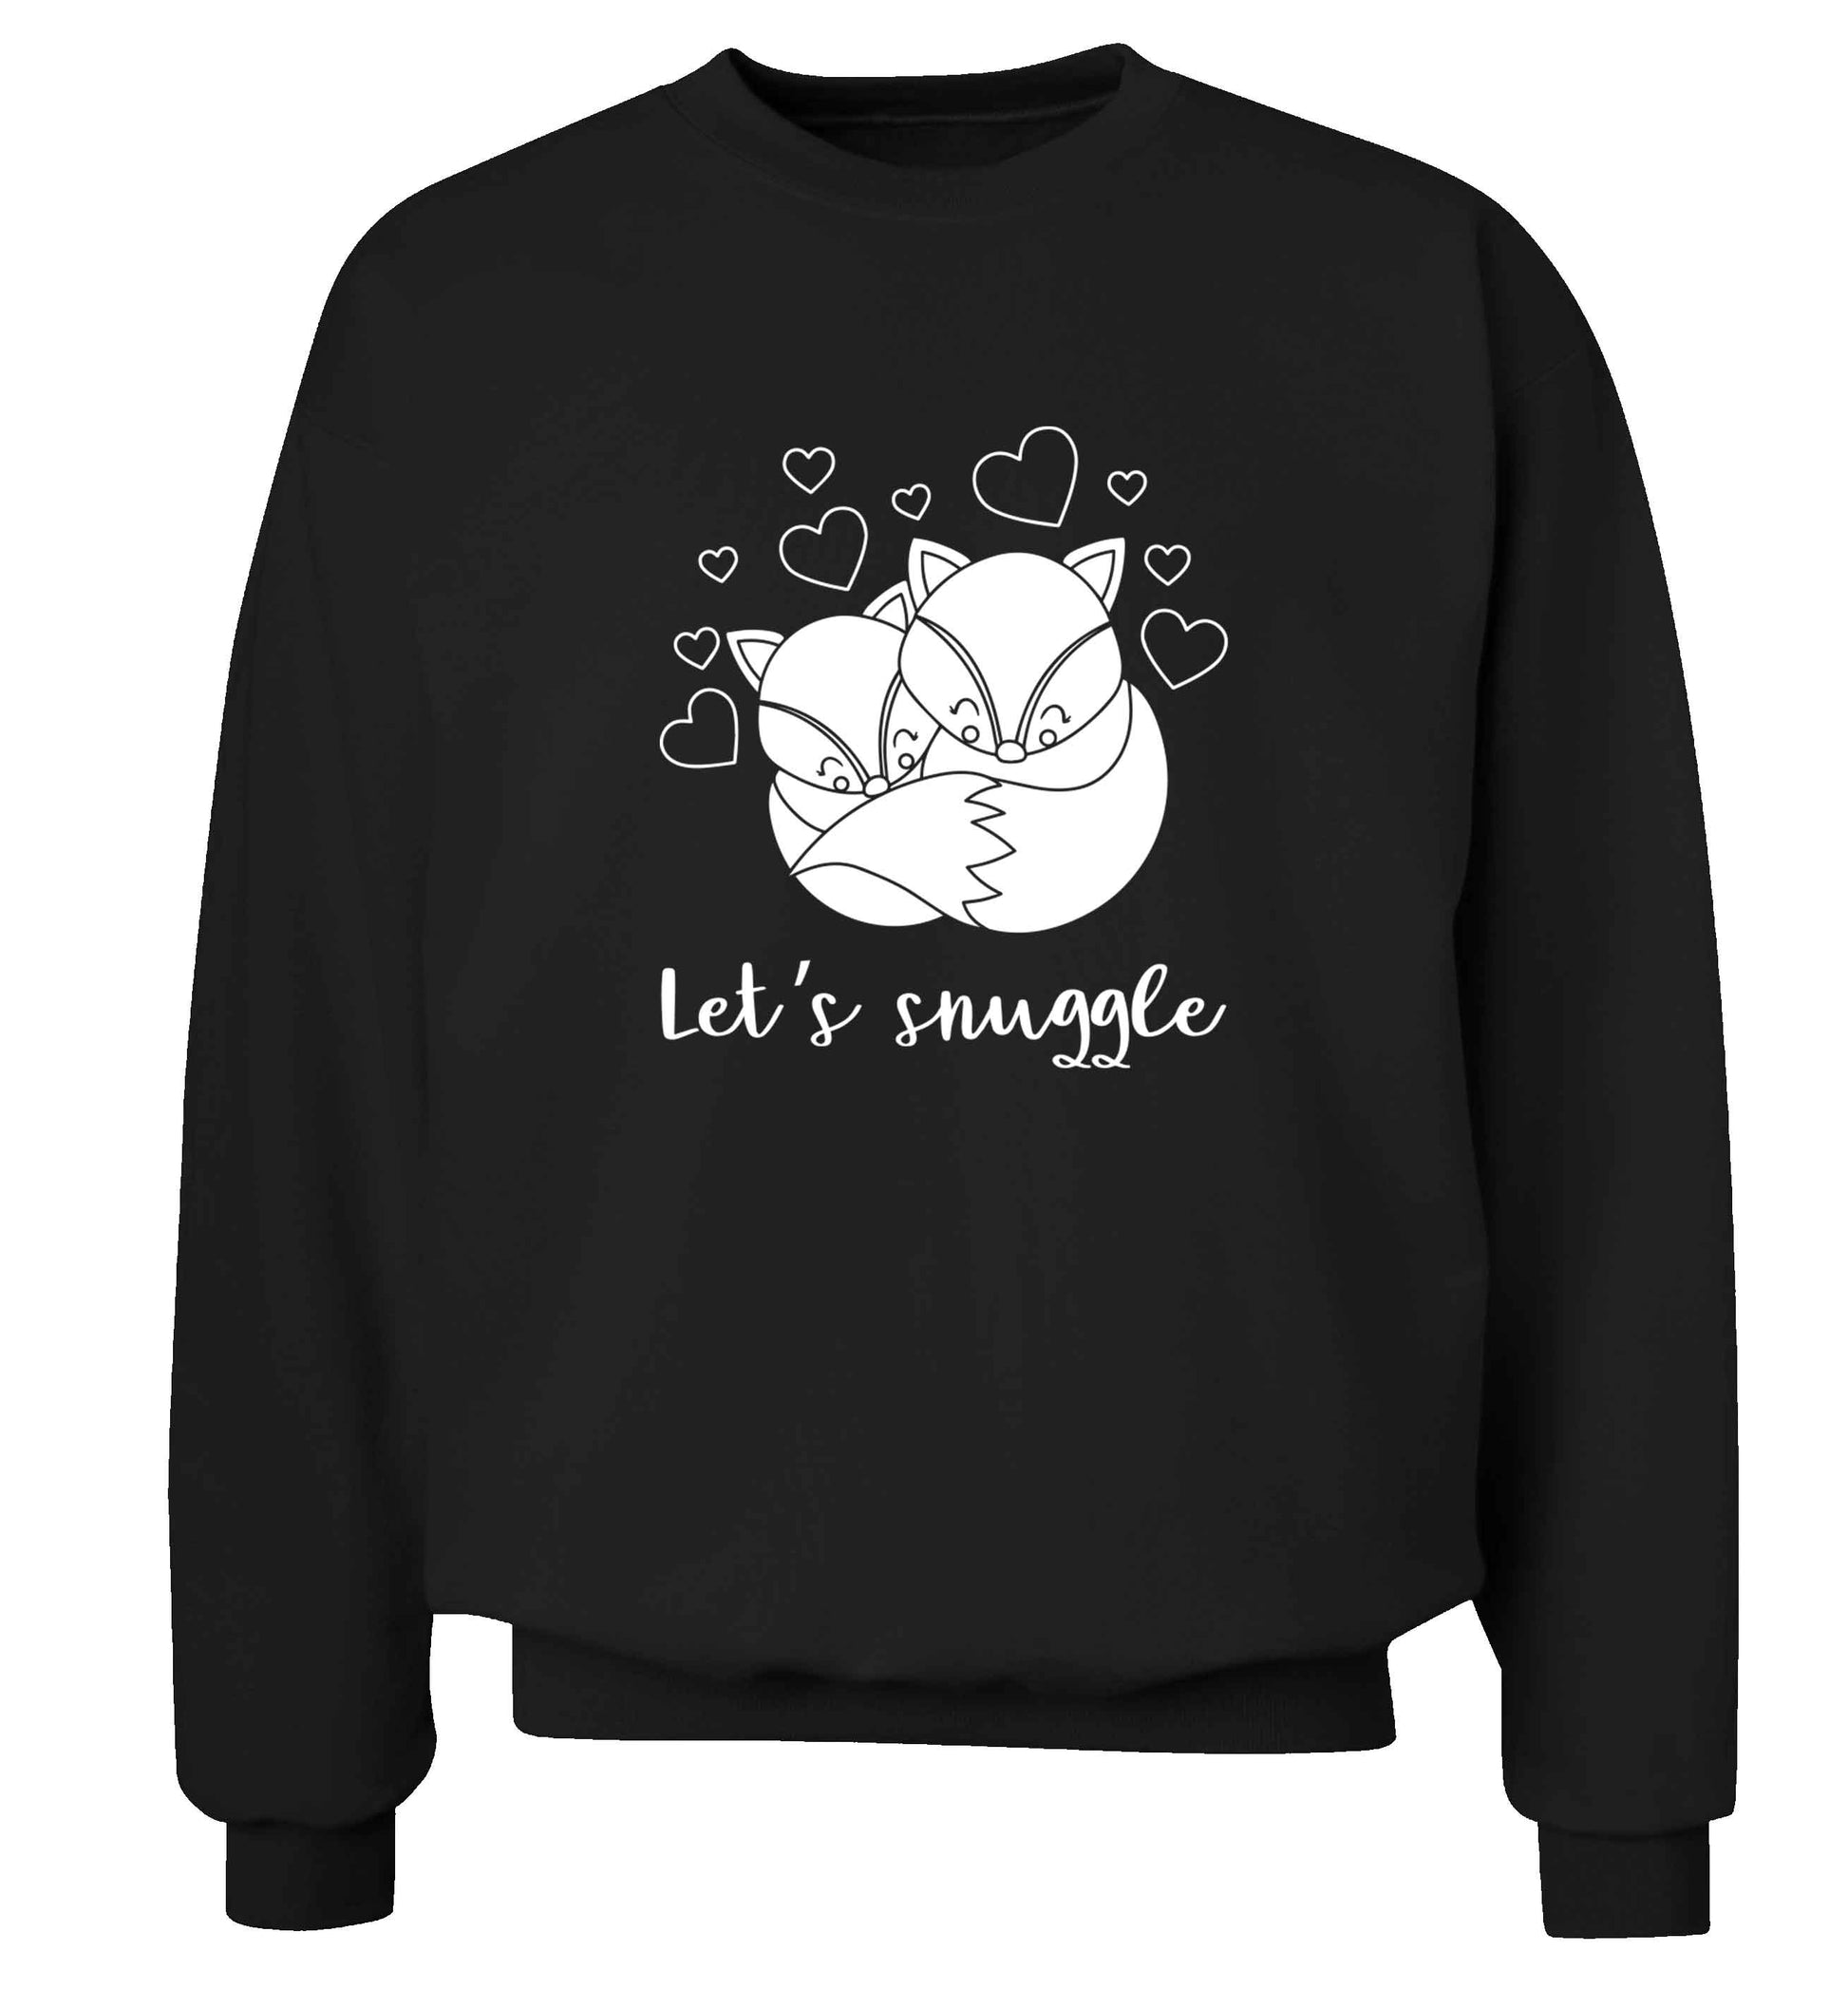 Let's snuggle adult's unisex black sweater 2XL